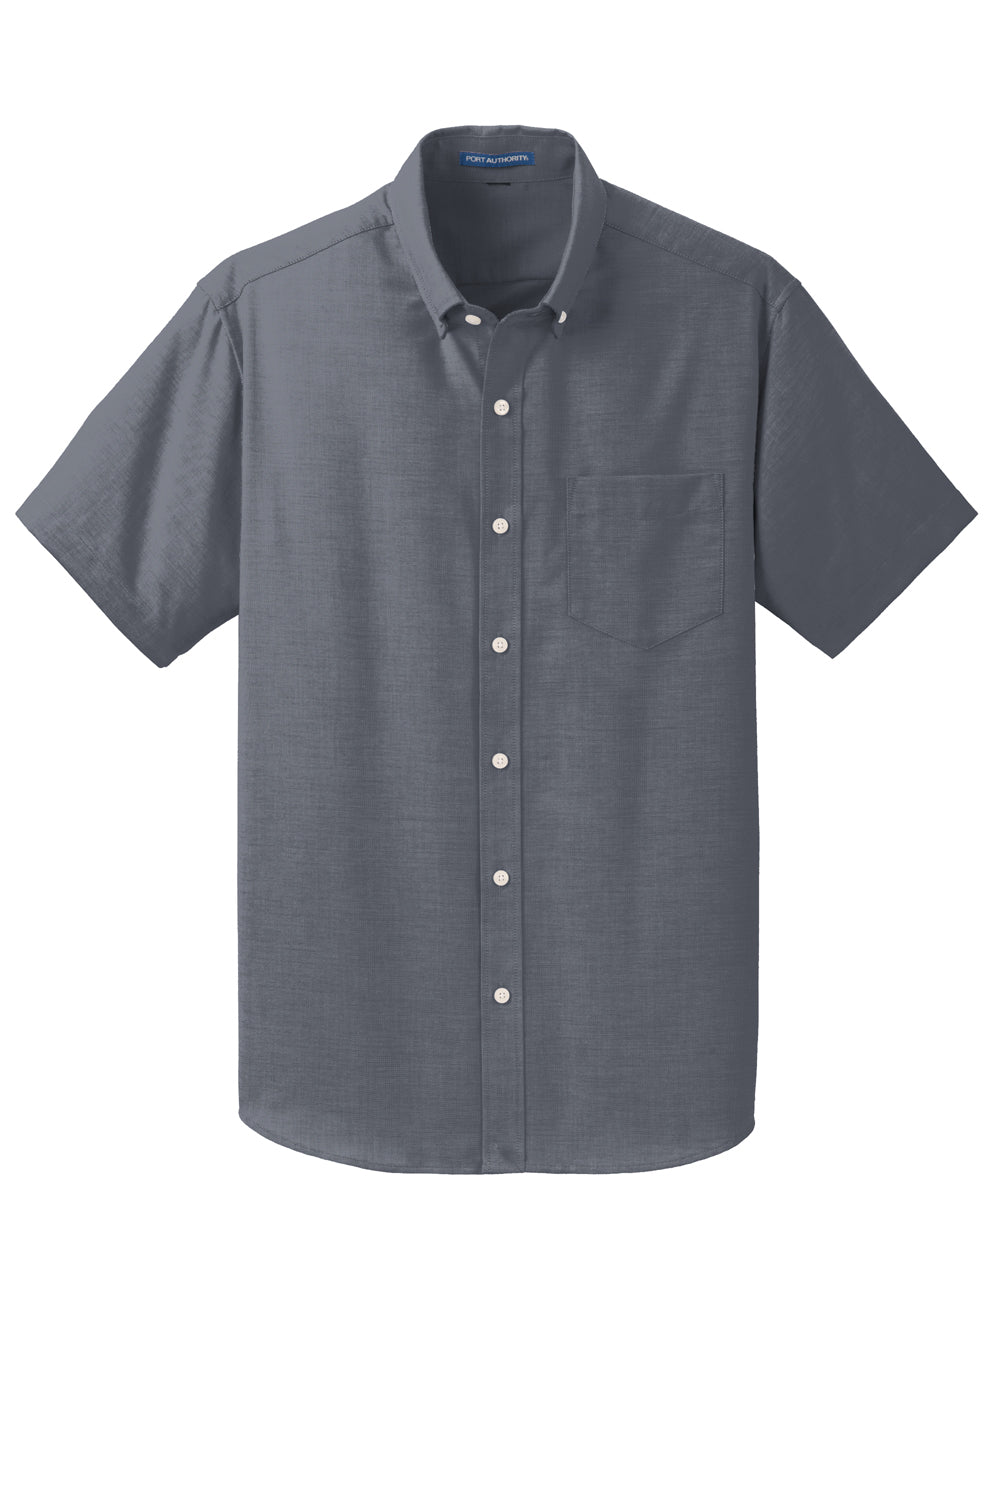 Port Authority S659 SuperPro Oxford Wrinkle Resistant Short Sleeve Button Down Shirt w/ Pocket Black Flat Front